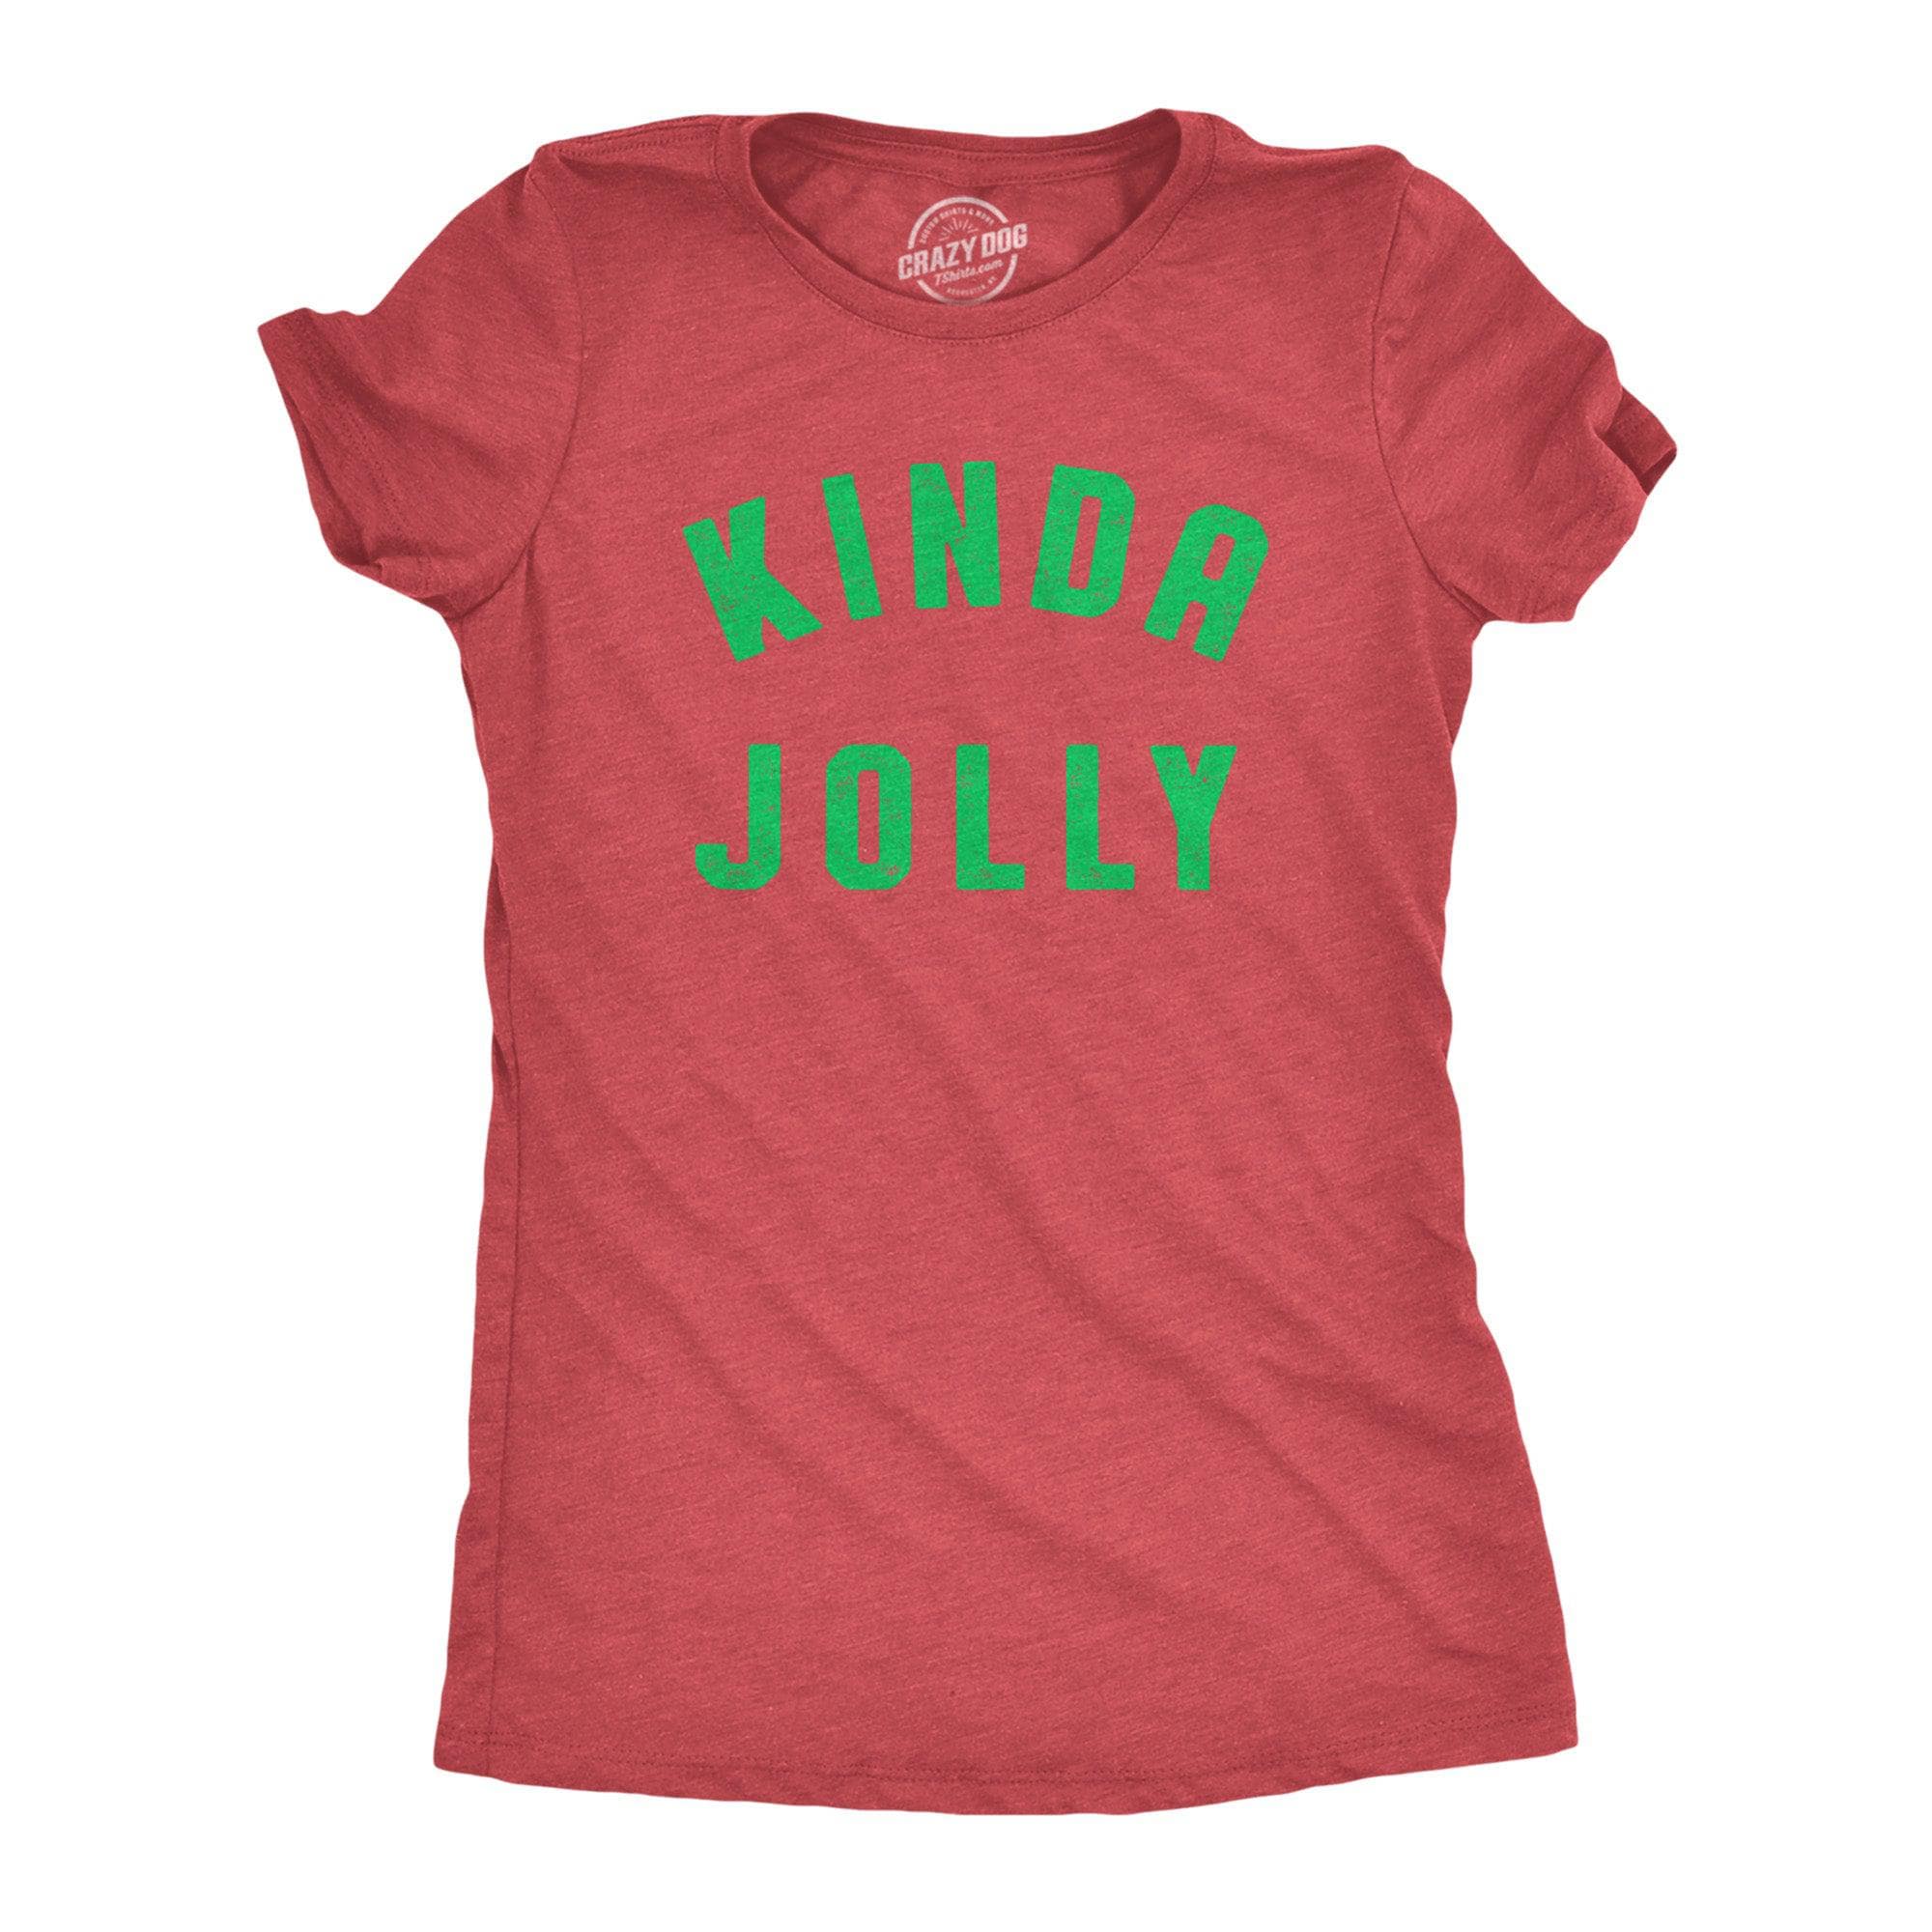 Kinda Jolly Women's Tshirt  -  Crazy Dog T-Shirts